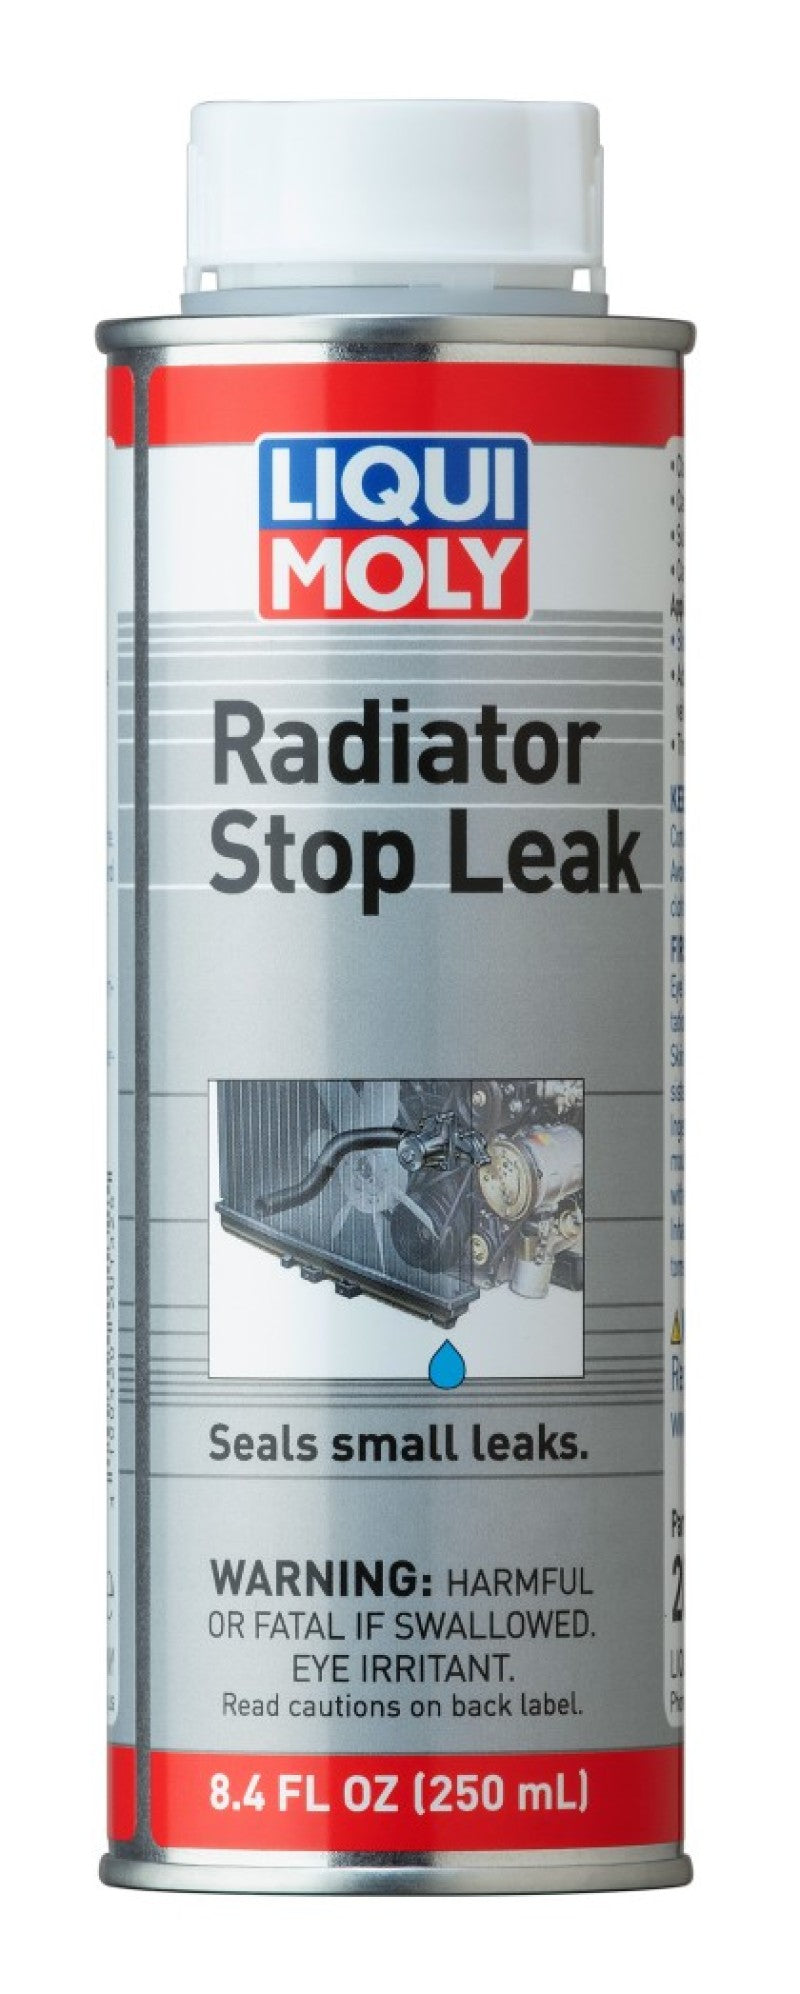 LIQUI MOLY 250mL Radiator Stop-Leak - Single.